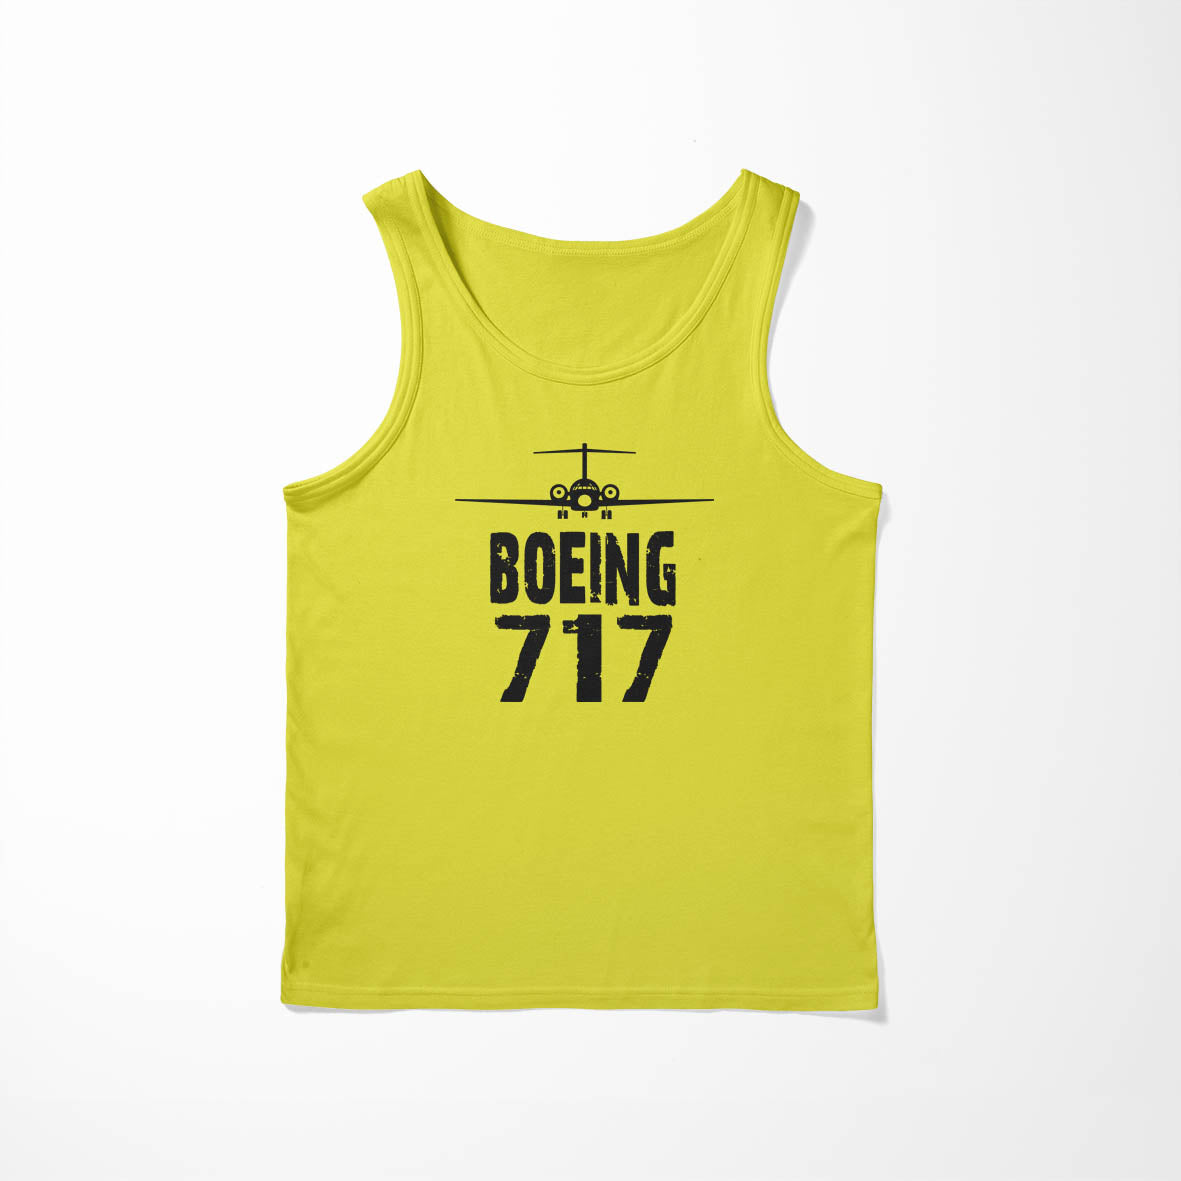 Boeing 717 & Plane Designed Tank Tops